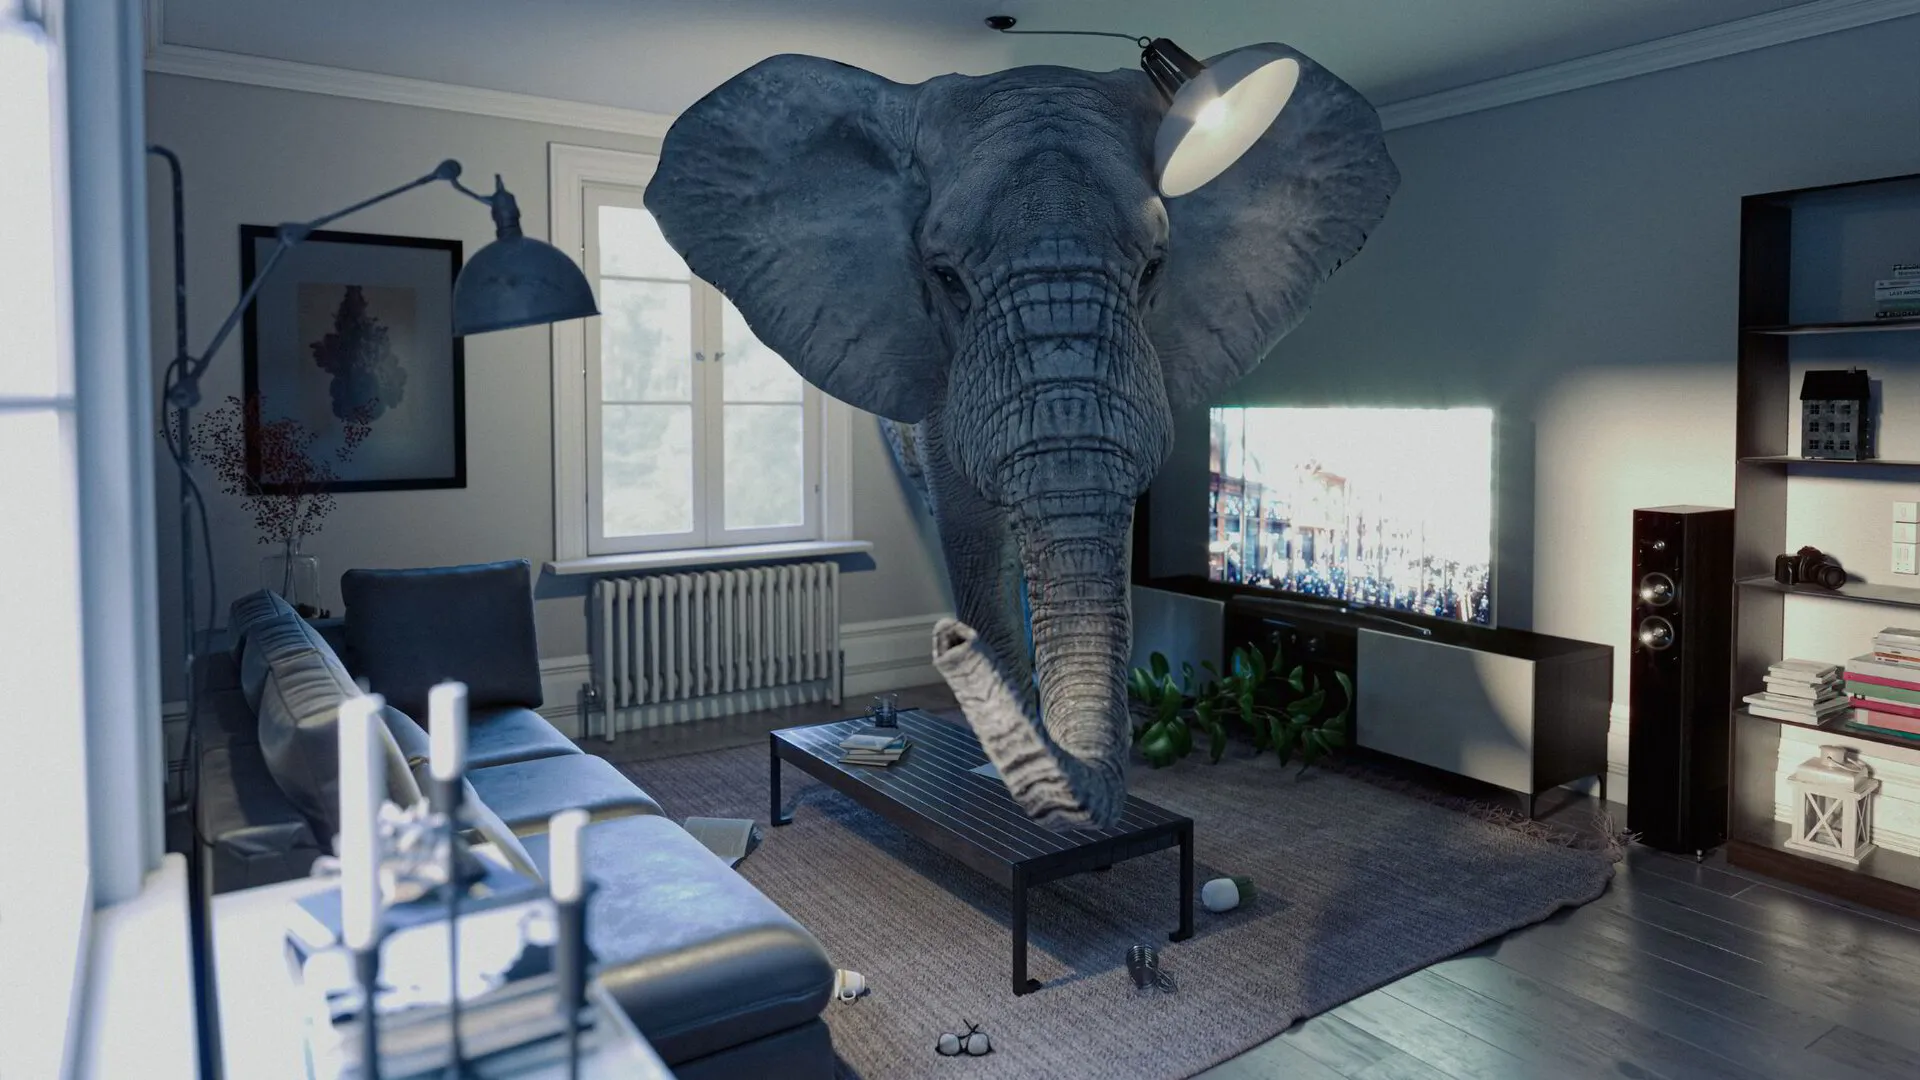 De olifant in de kamer